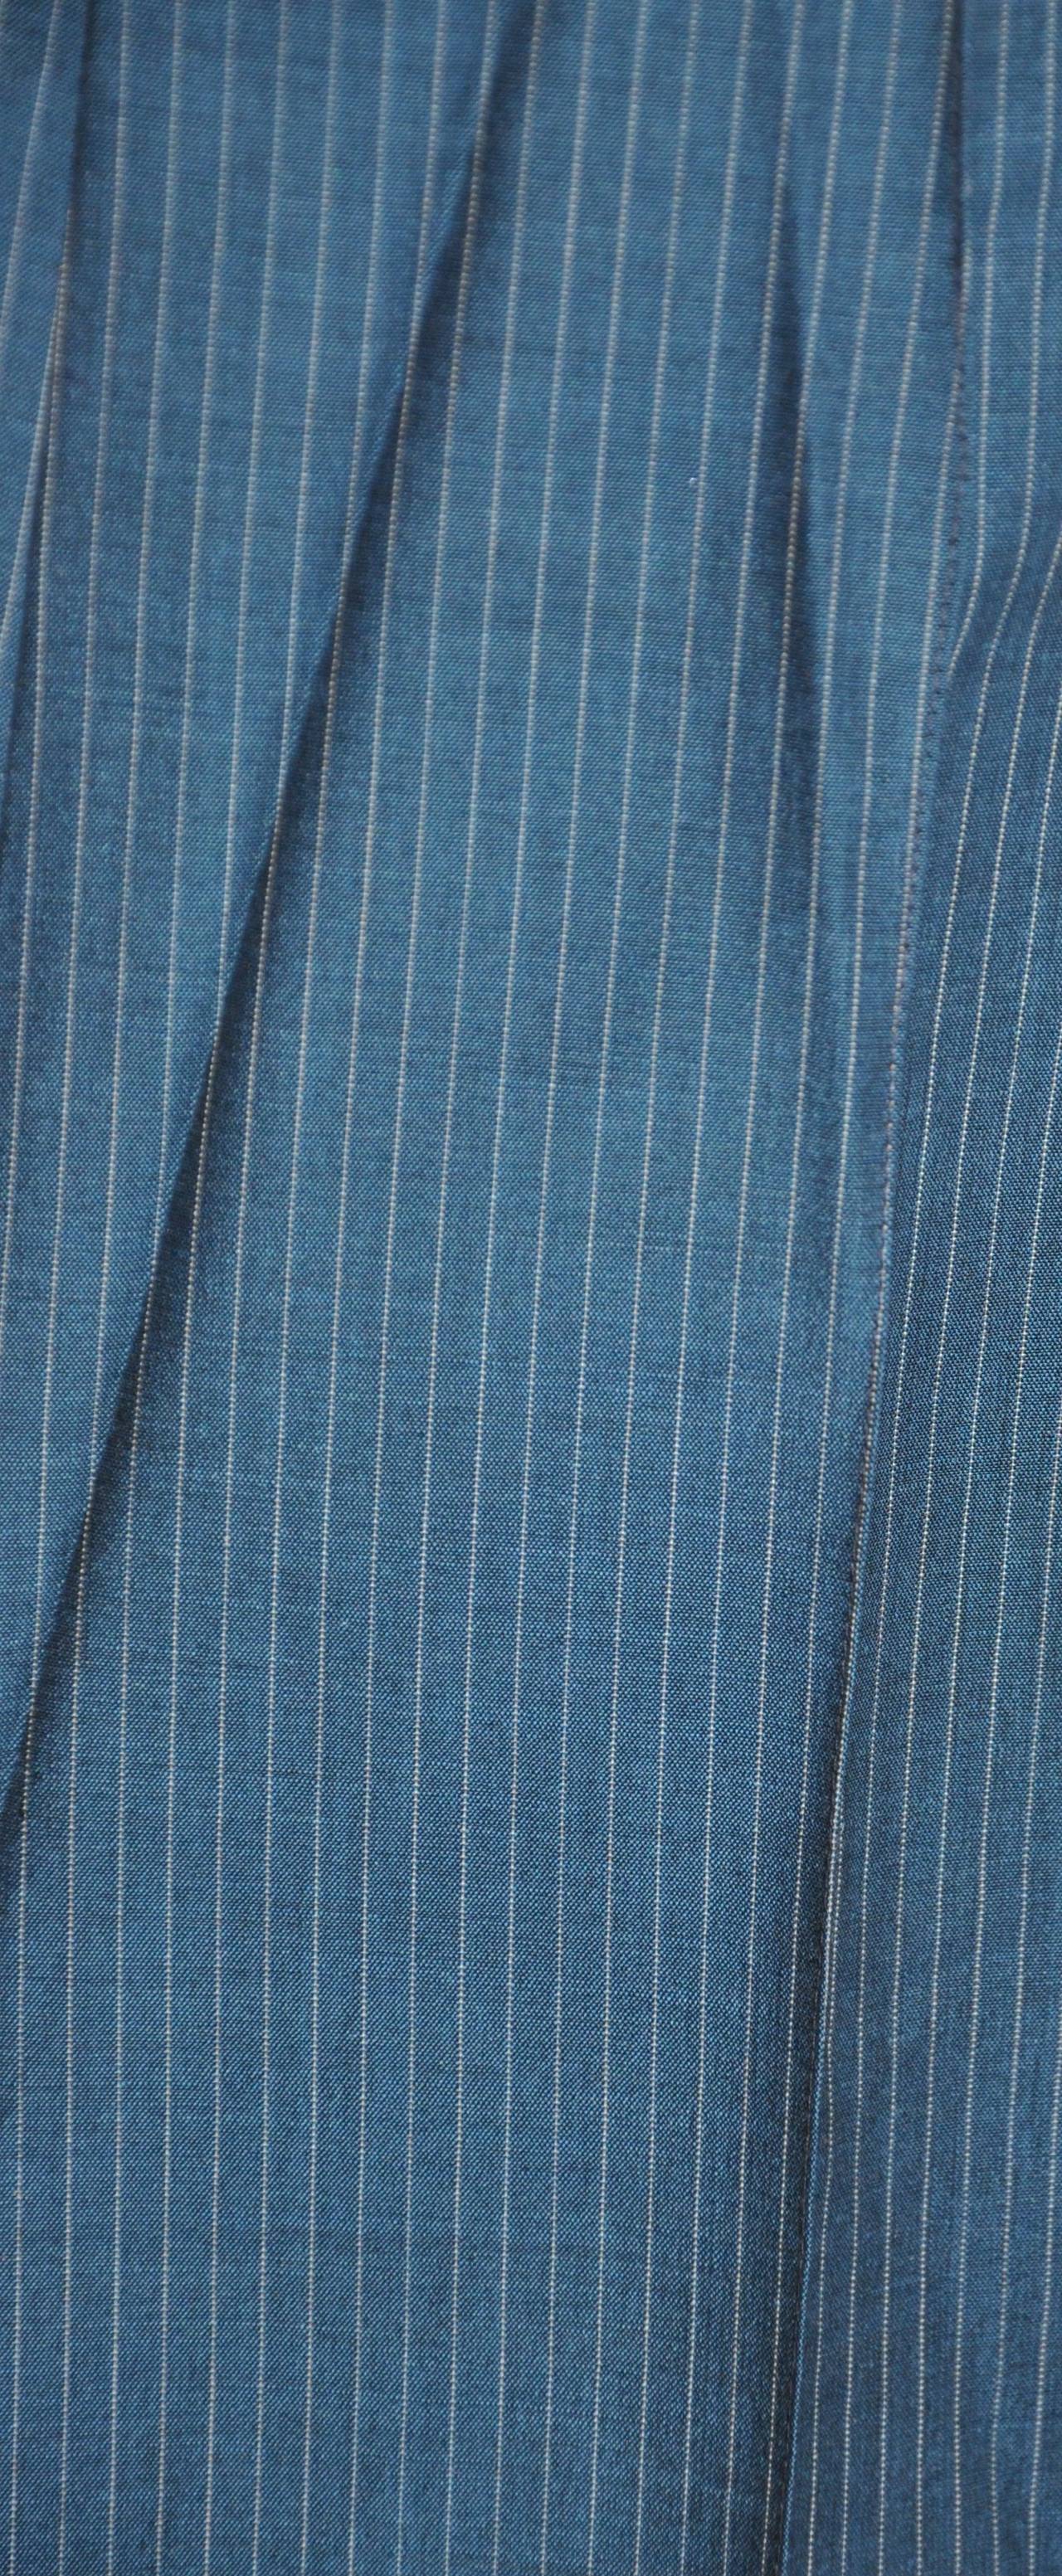 Romeo Gigli's wonderfully wicked blue pinstripe silk trousers measures 26